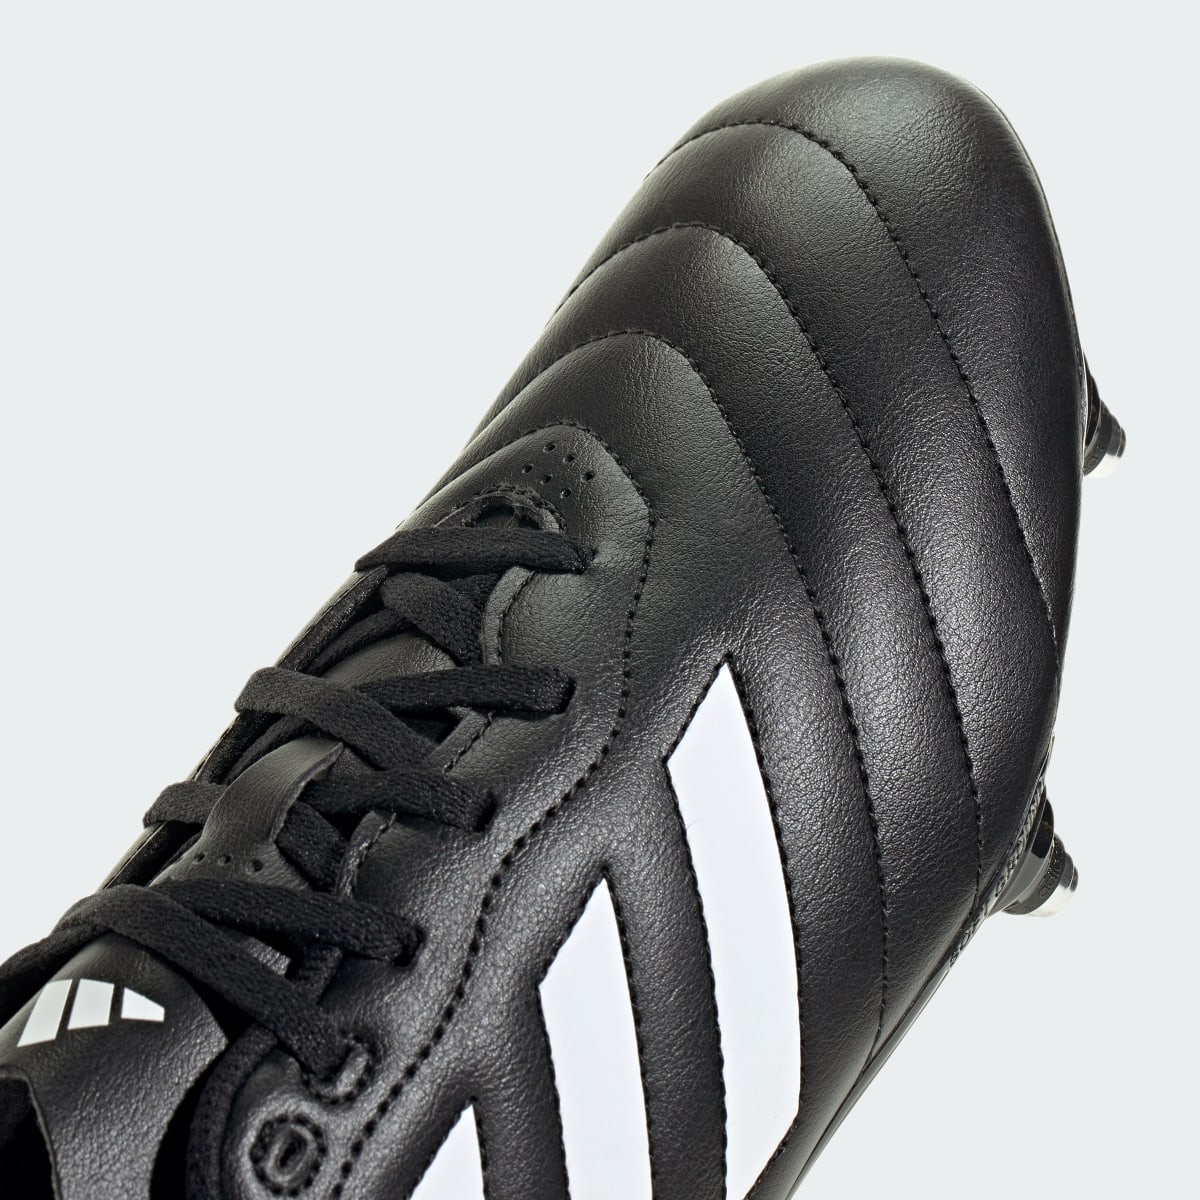 Adidas Goletto VIII Soft Ground Boots. 7